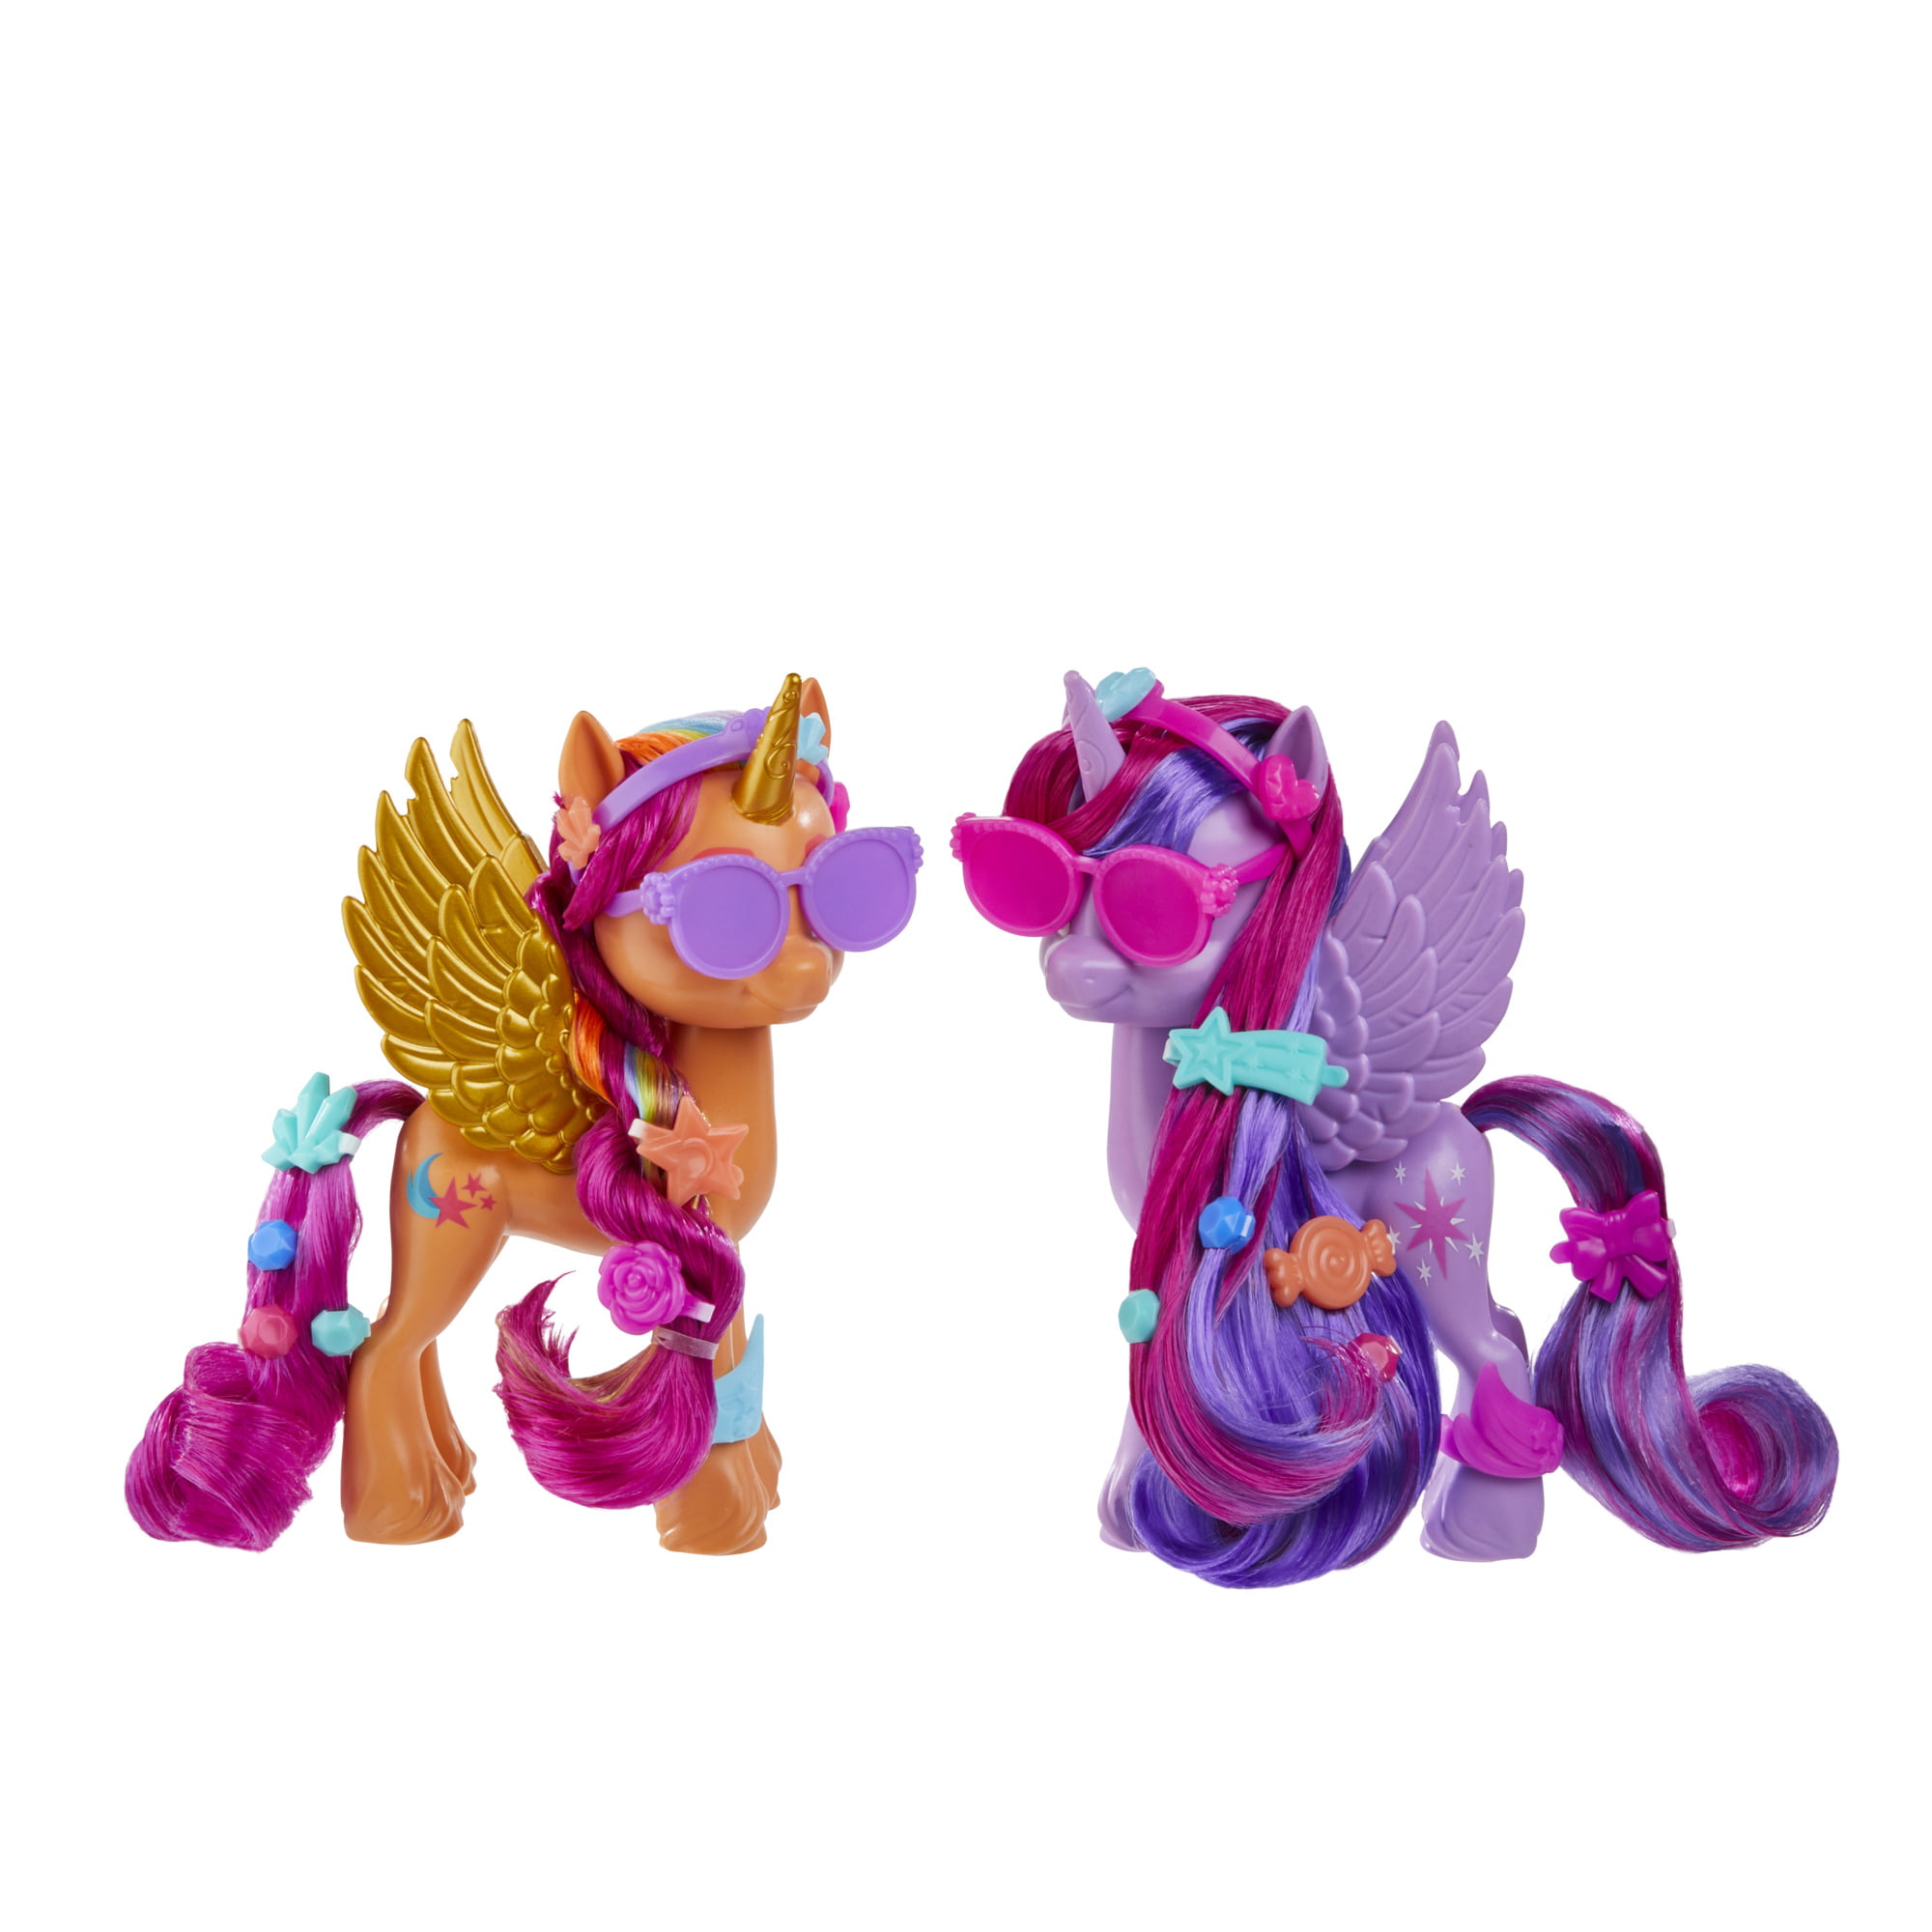 NWT My Little Pony Friendship is Magic 5" Plush G4 PICK YOUR PONY 